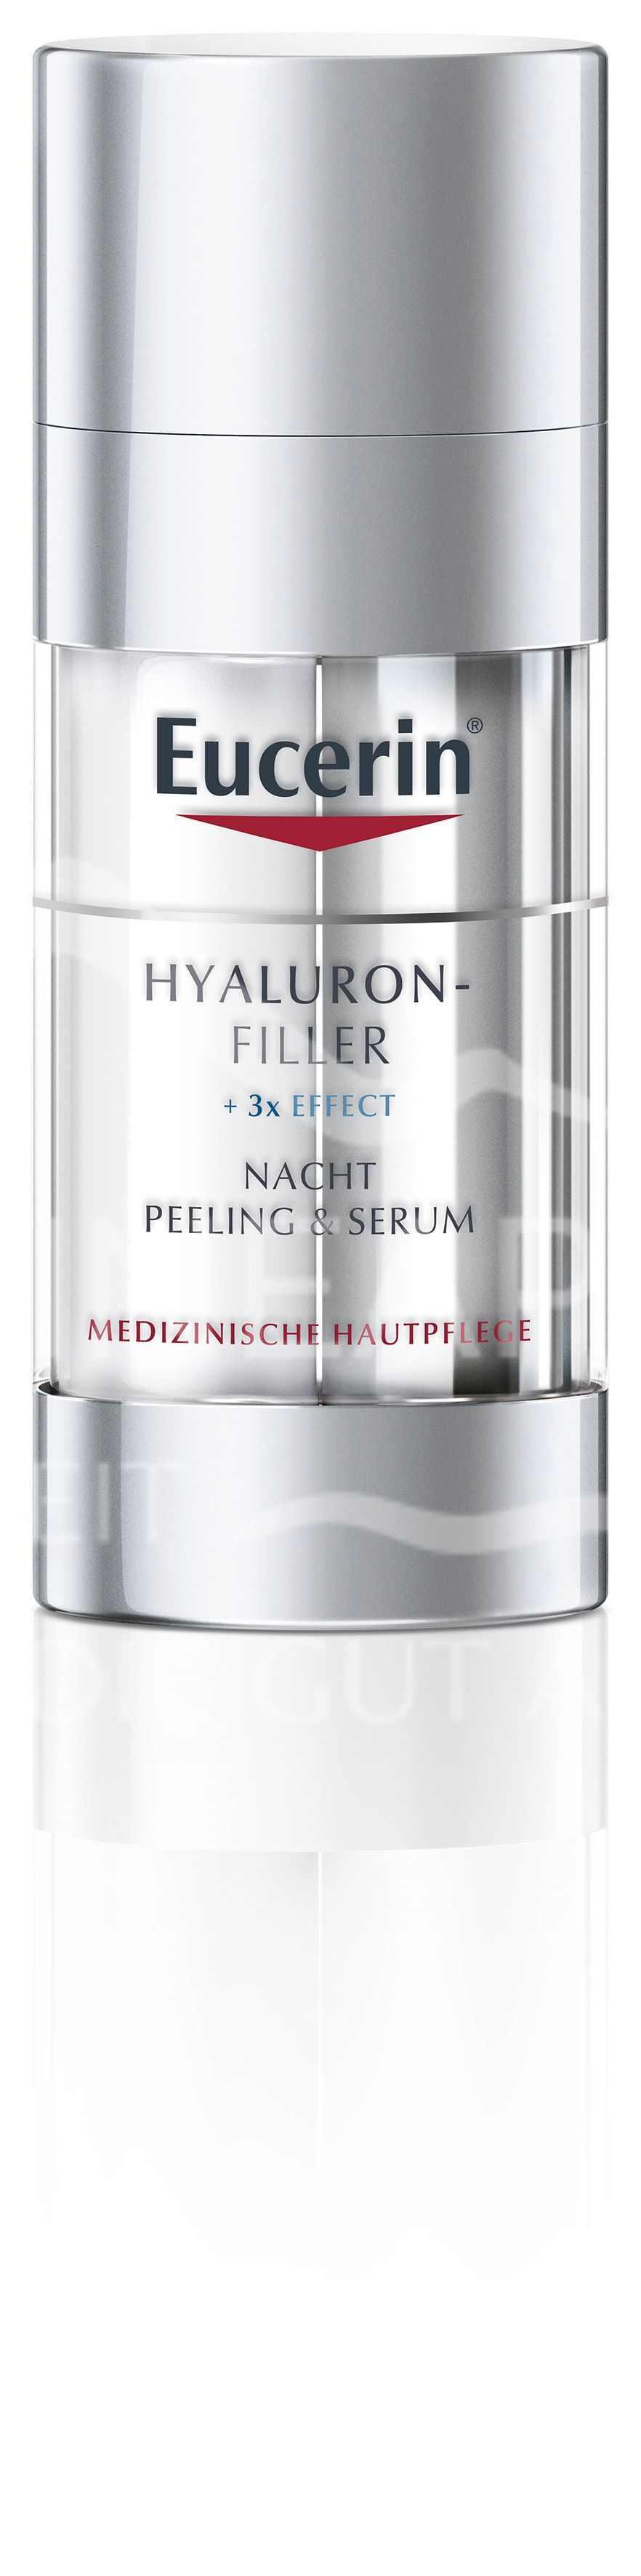 Eucerin® HYALURON-FILLER Nacht-Peeling & Serum